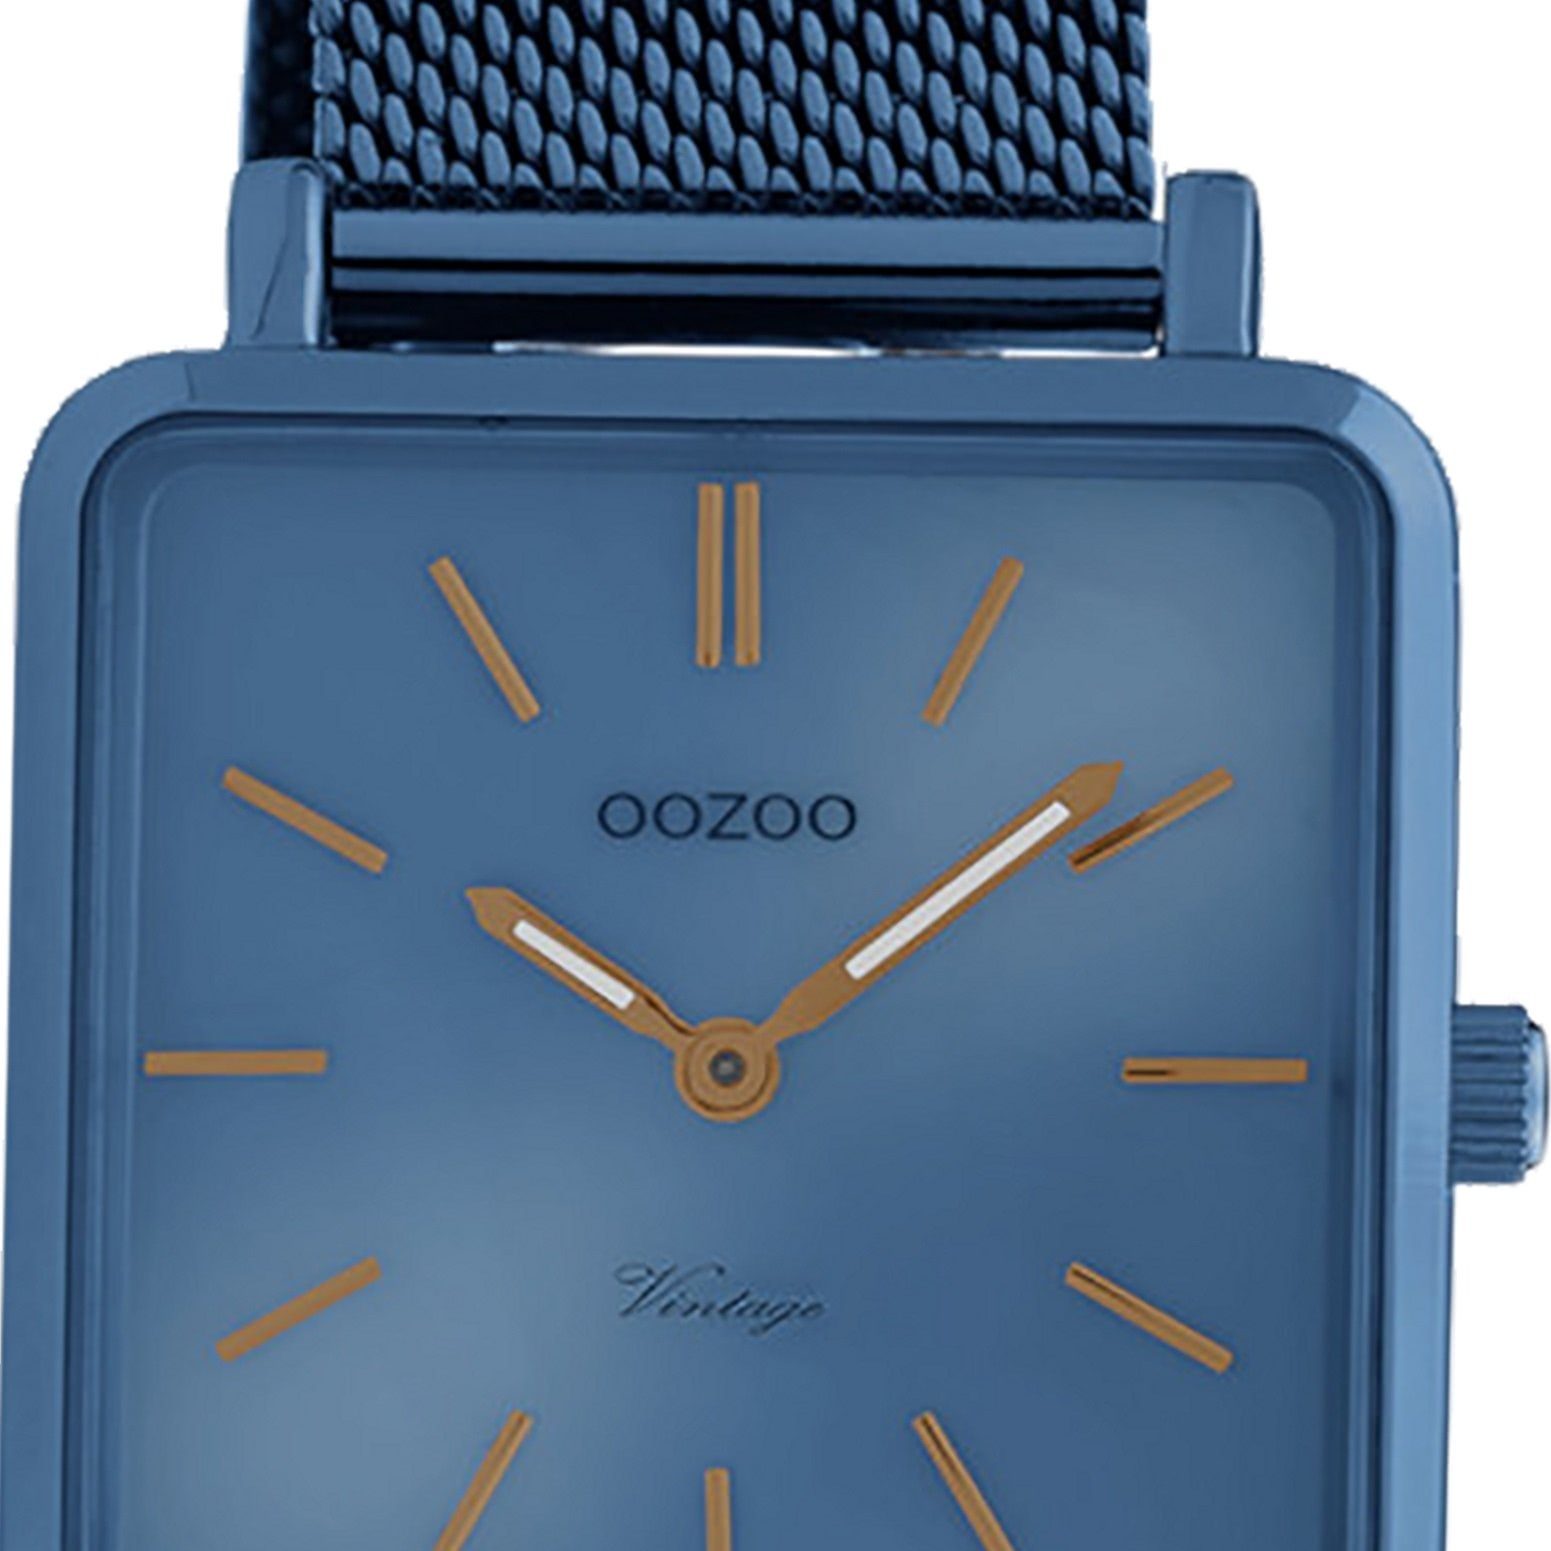 OOZOO Quarzuhr Oozoo Damen Armbanduhr blau Analog, Damenuhr eckig, klein  (ca. 29mm) Edelstahlarmband, Fashion-Style, rosegoldene Zeiger und Indizes